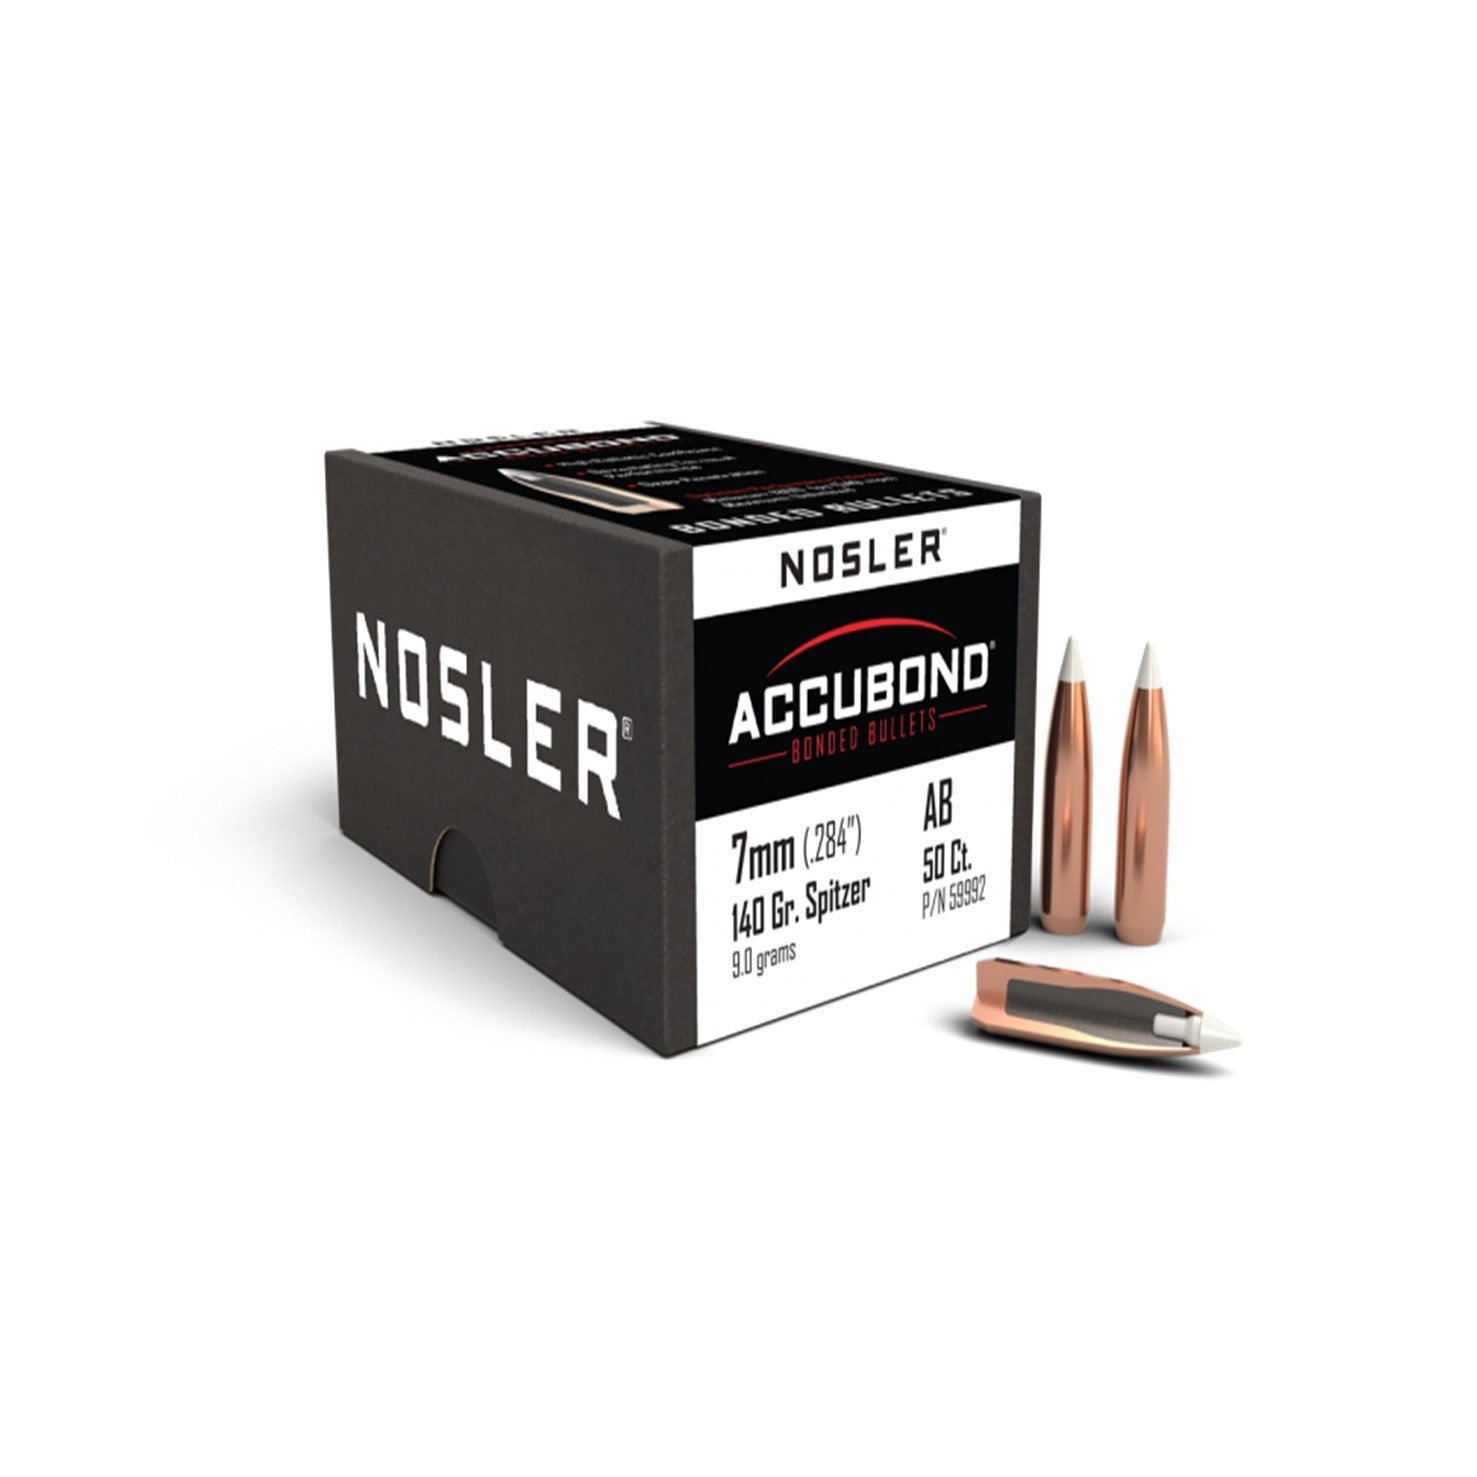 Nosler Accubond Rifle Bullets 7mm 140Gr